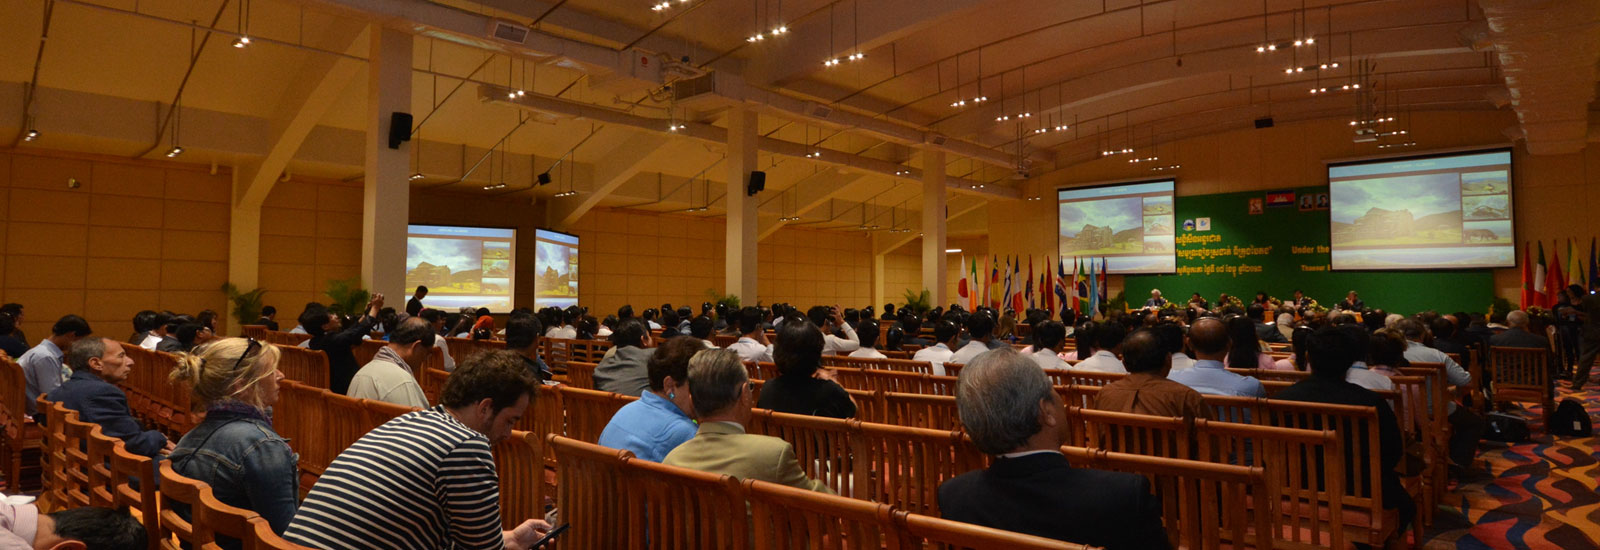 Bokor Conference Hall